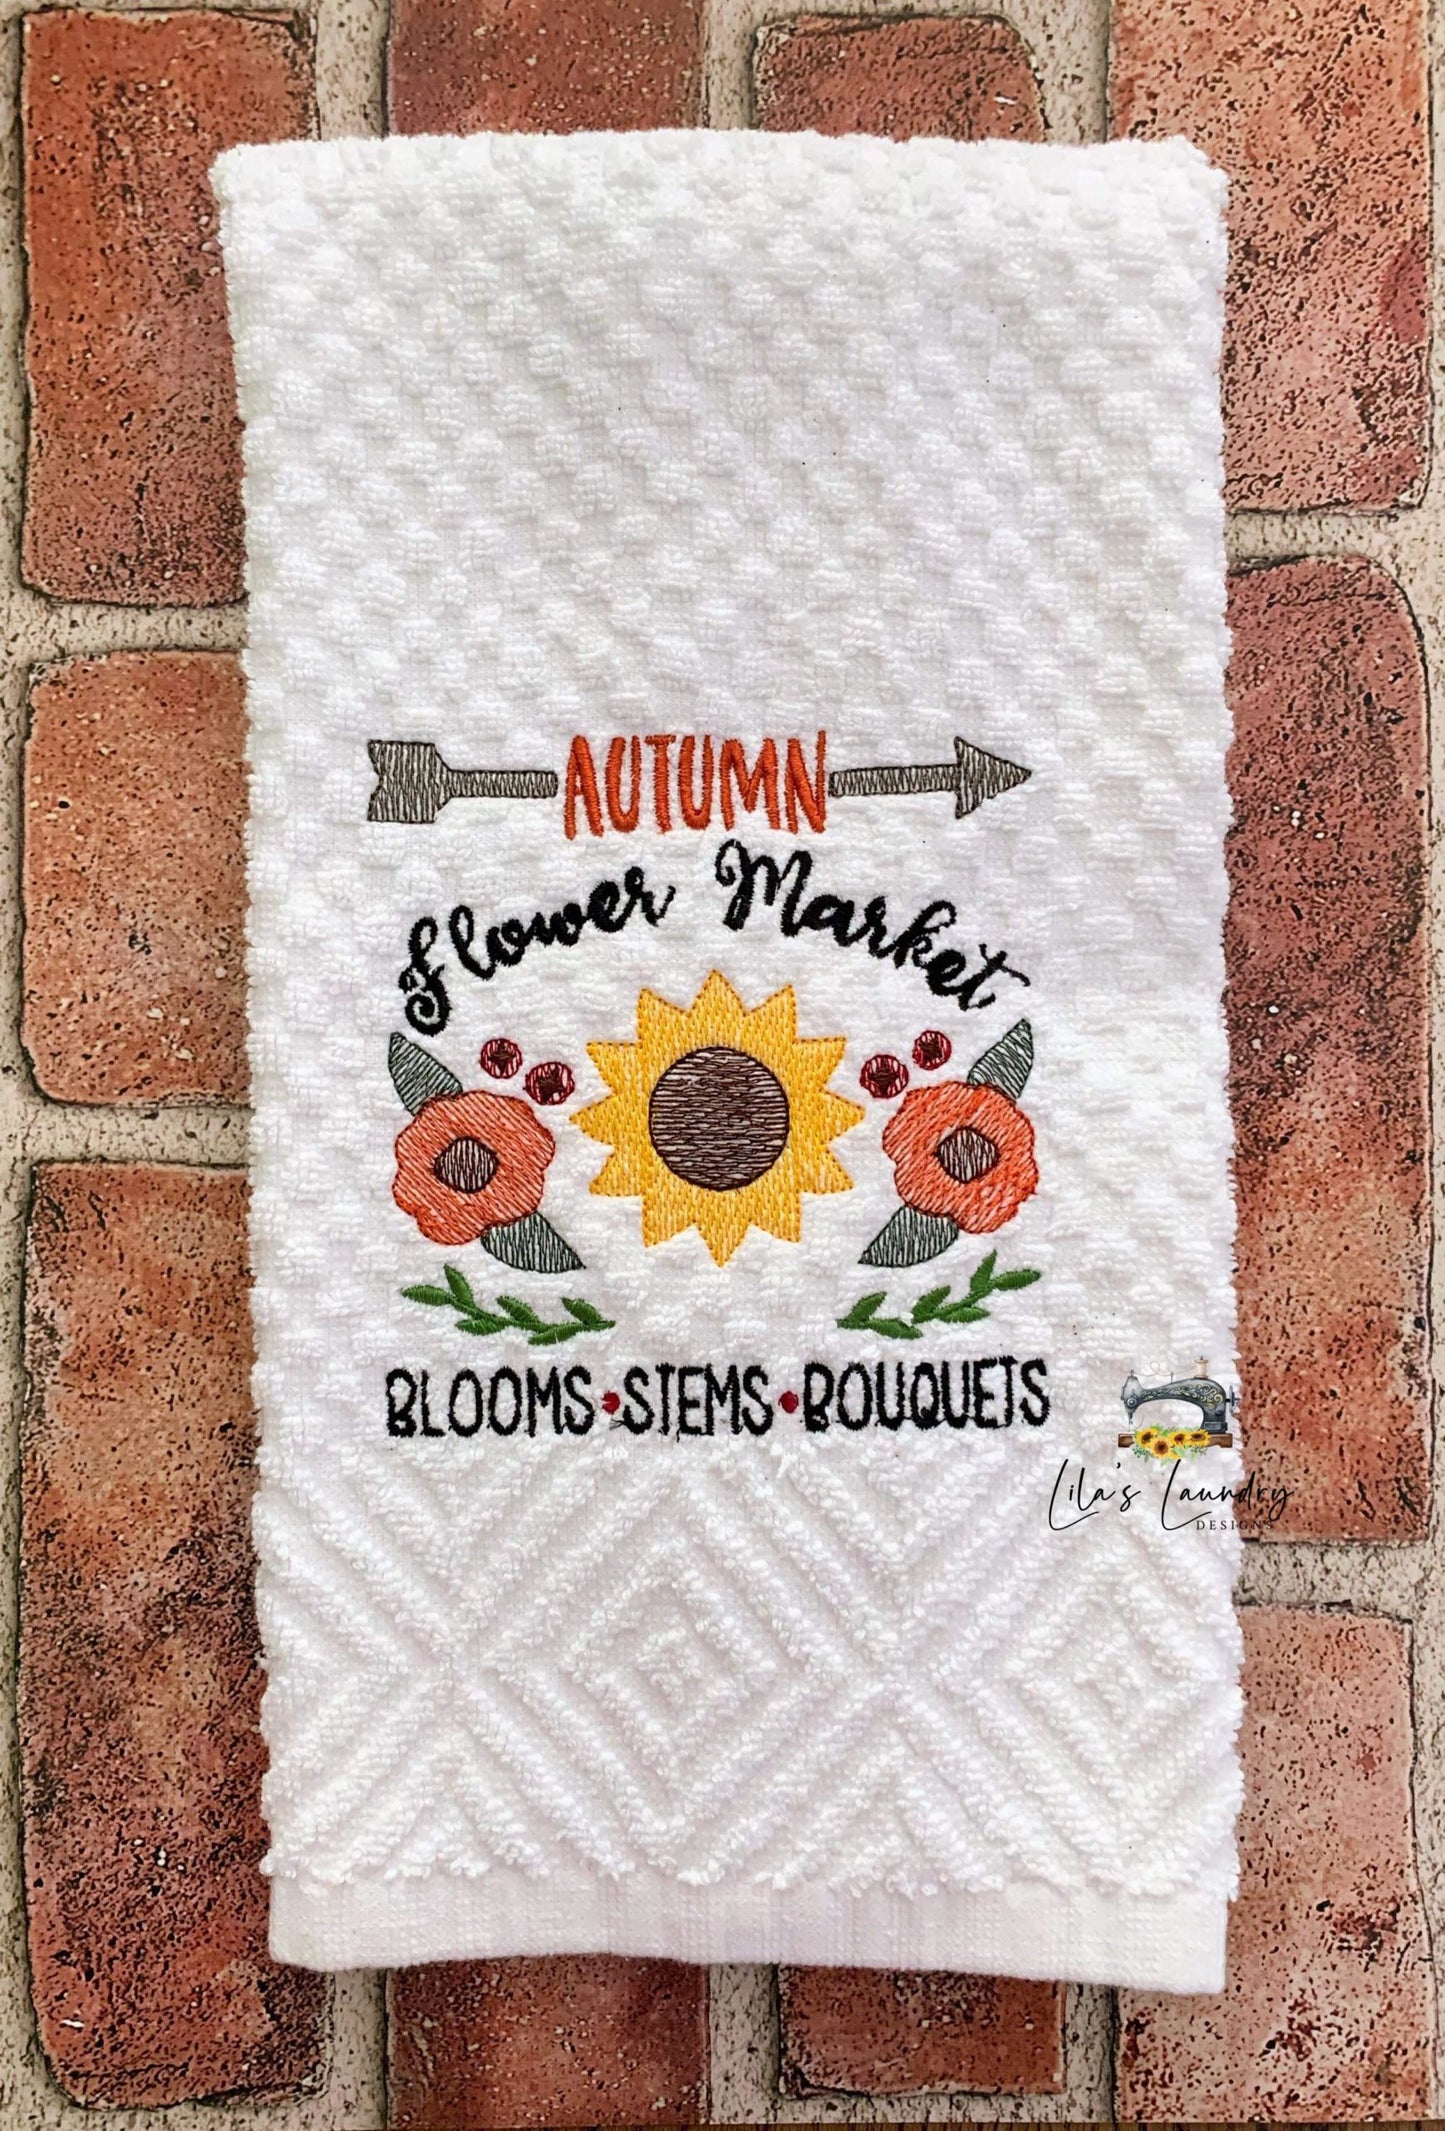 Autumn Flower Market - 3 sizes- Digital Embroidery Design